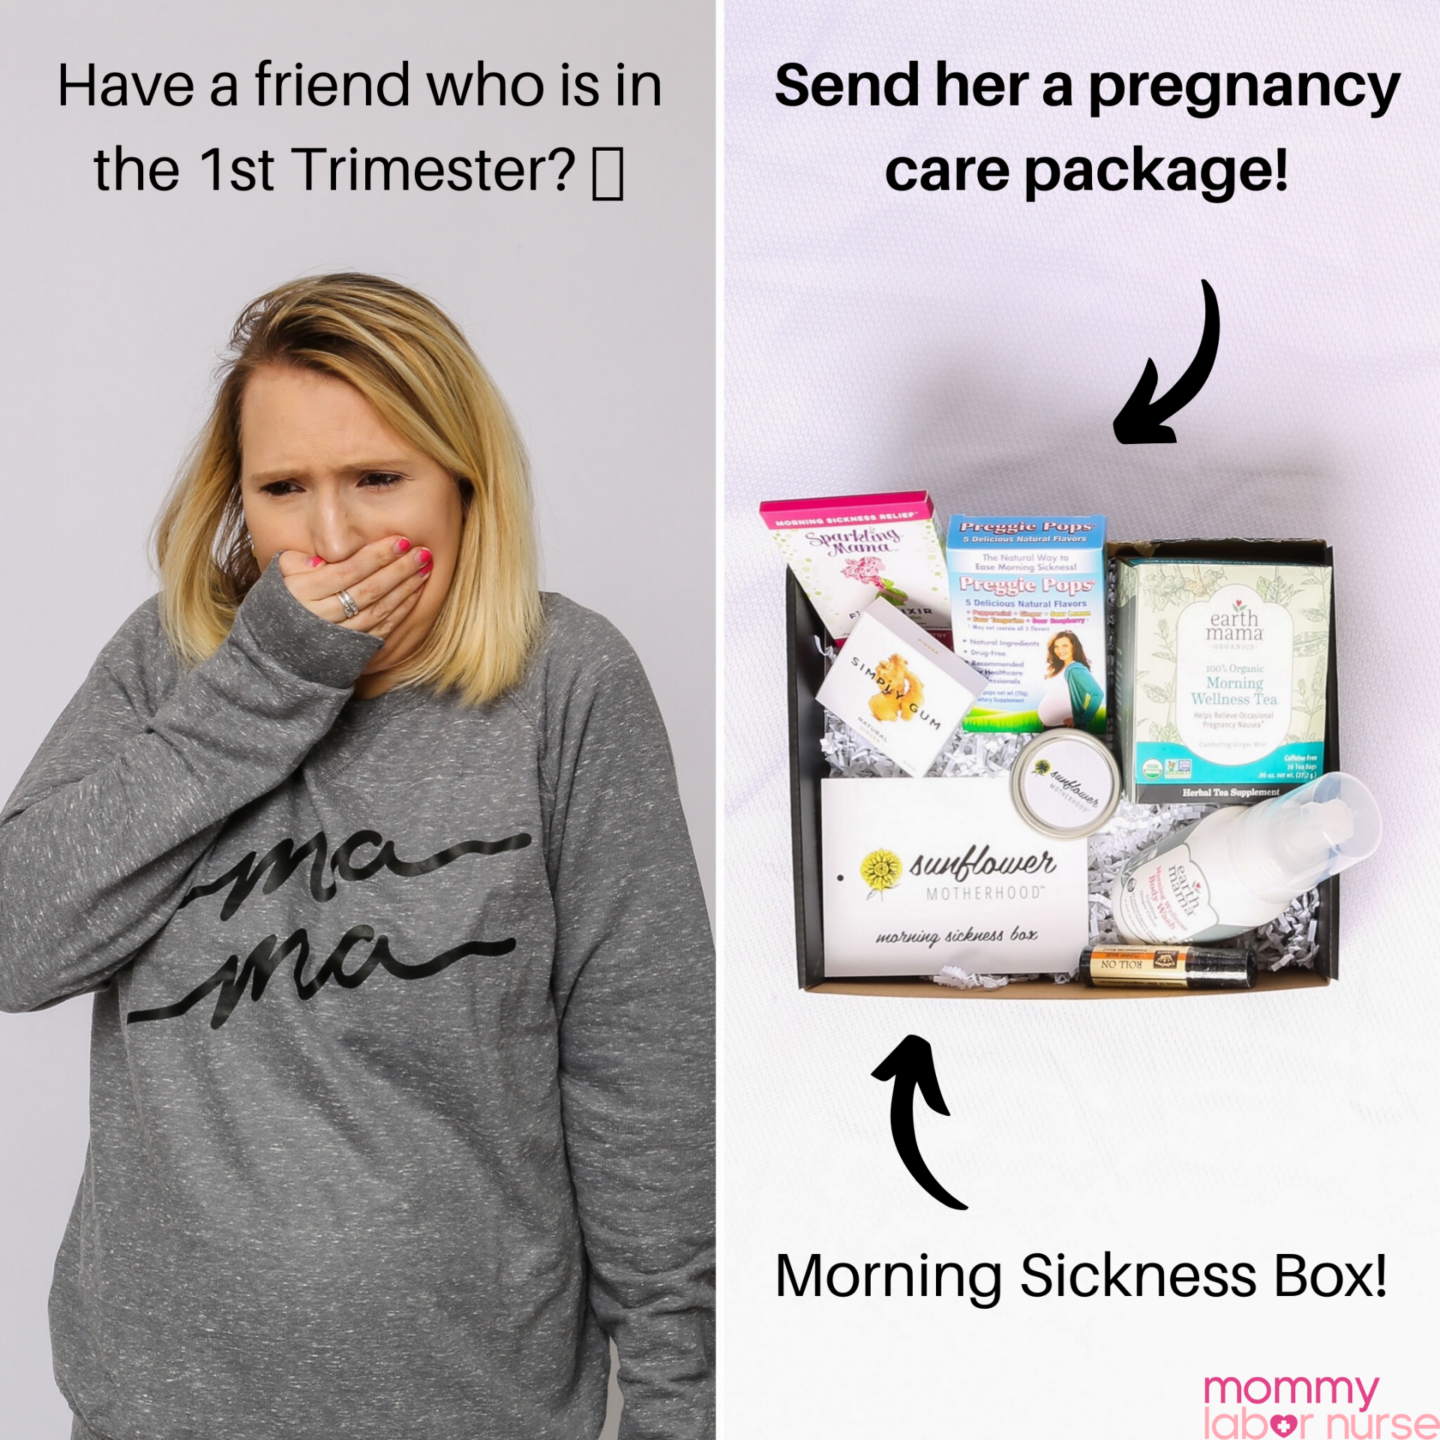 https://mommylabornurse.com/wp-content/uploads/2020/10/gift-morning-sickness-box-1440x1440.png